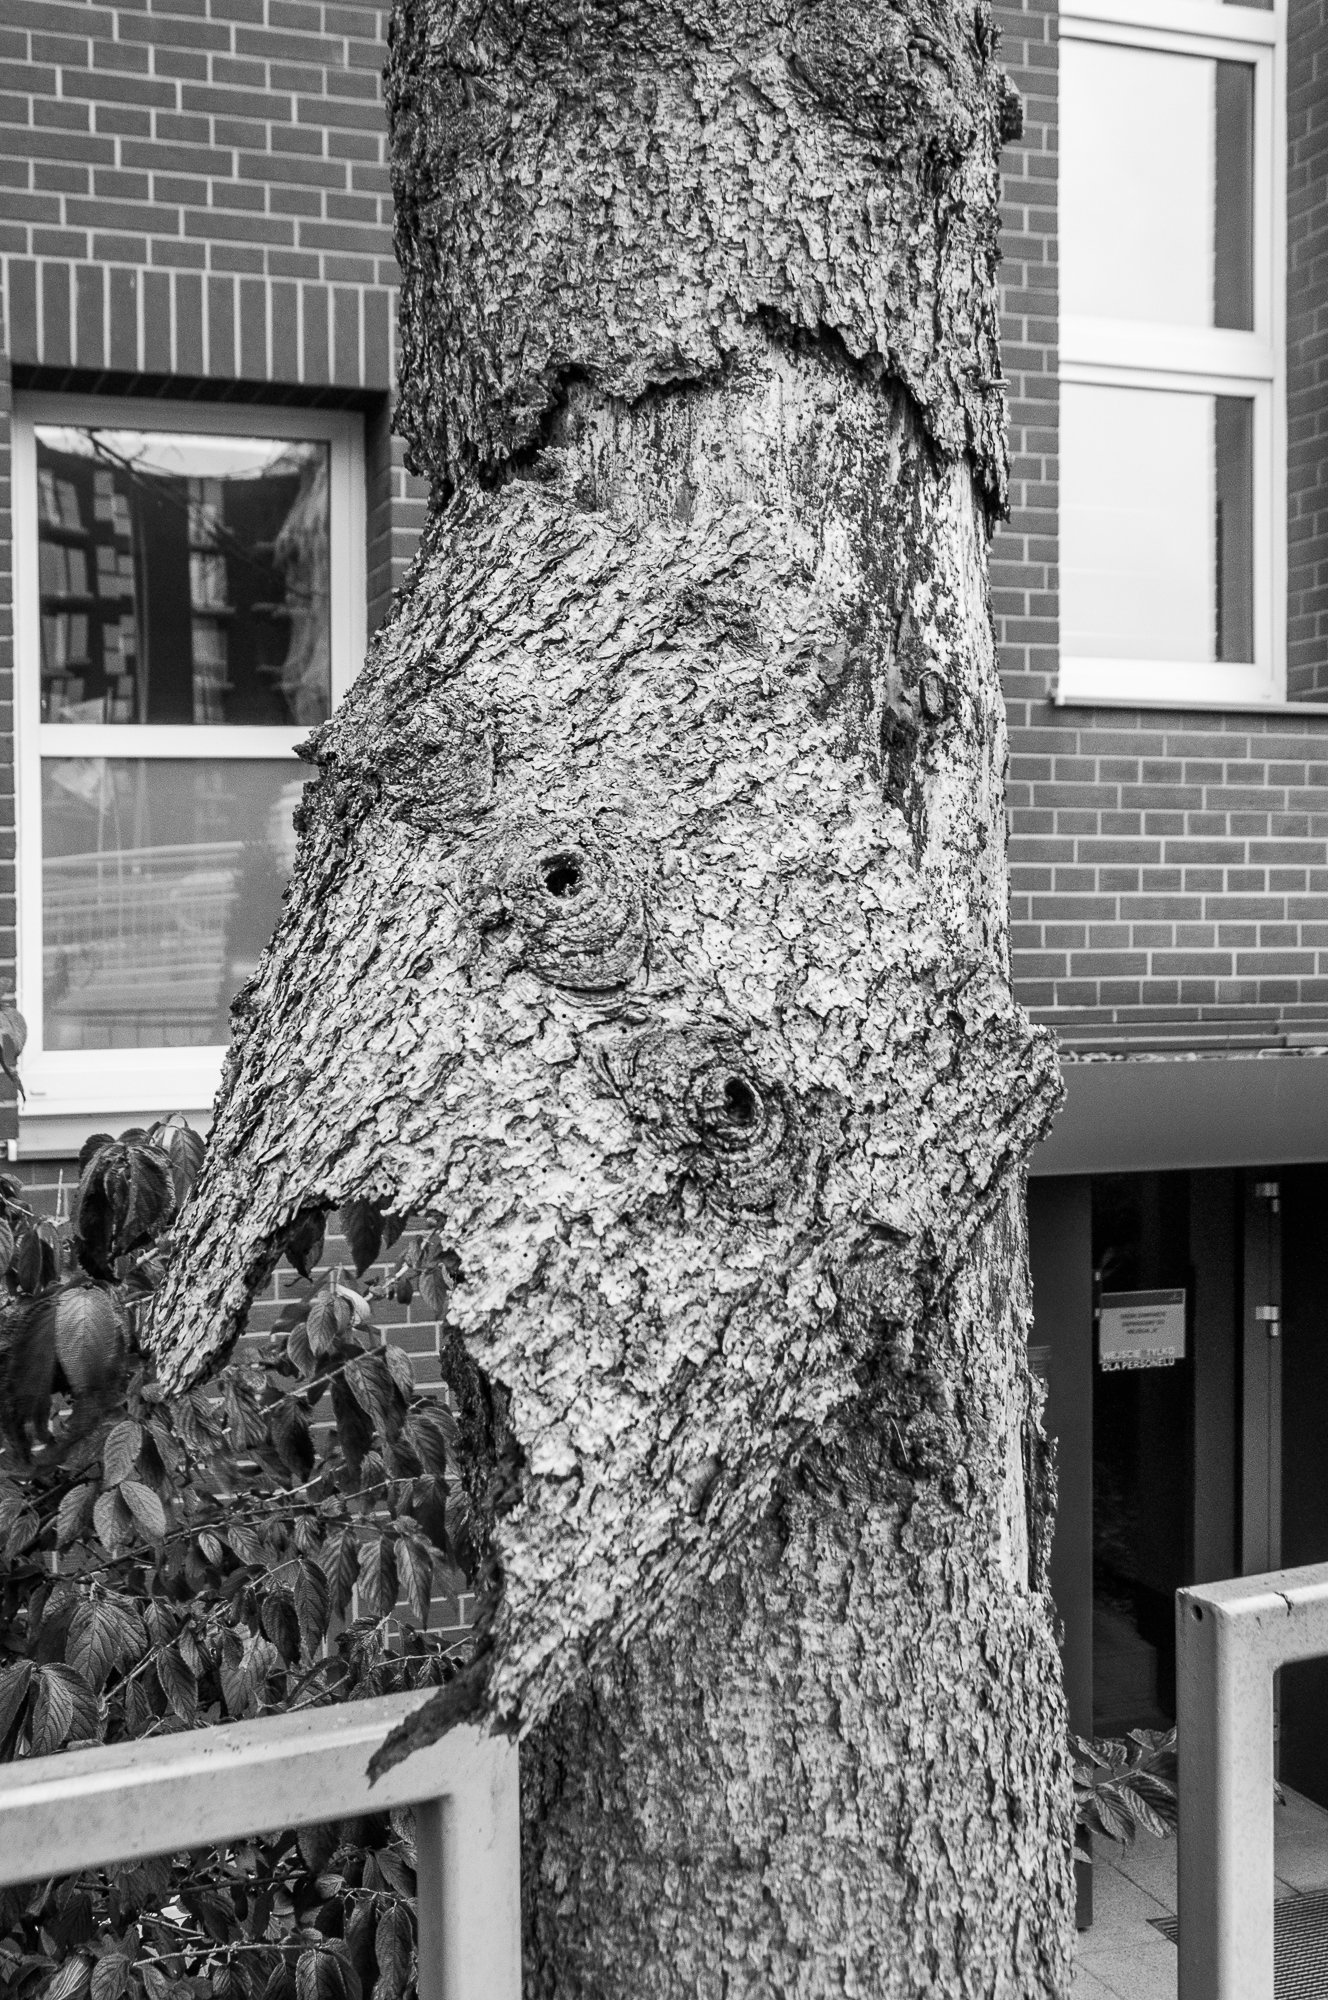 Adam Mazek Photography Warsaw 2020. Post: "Immortalizing." Minimalism. Tree. You shall not pass. Creepy. Face.